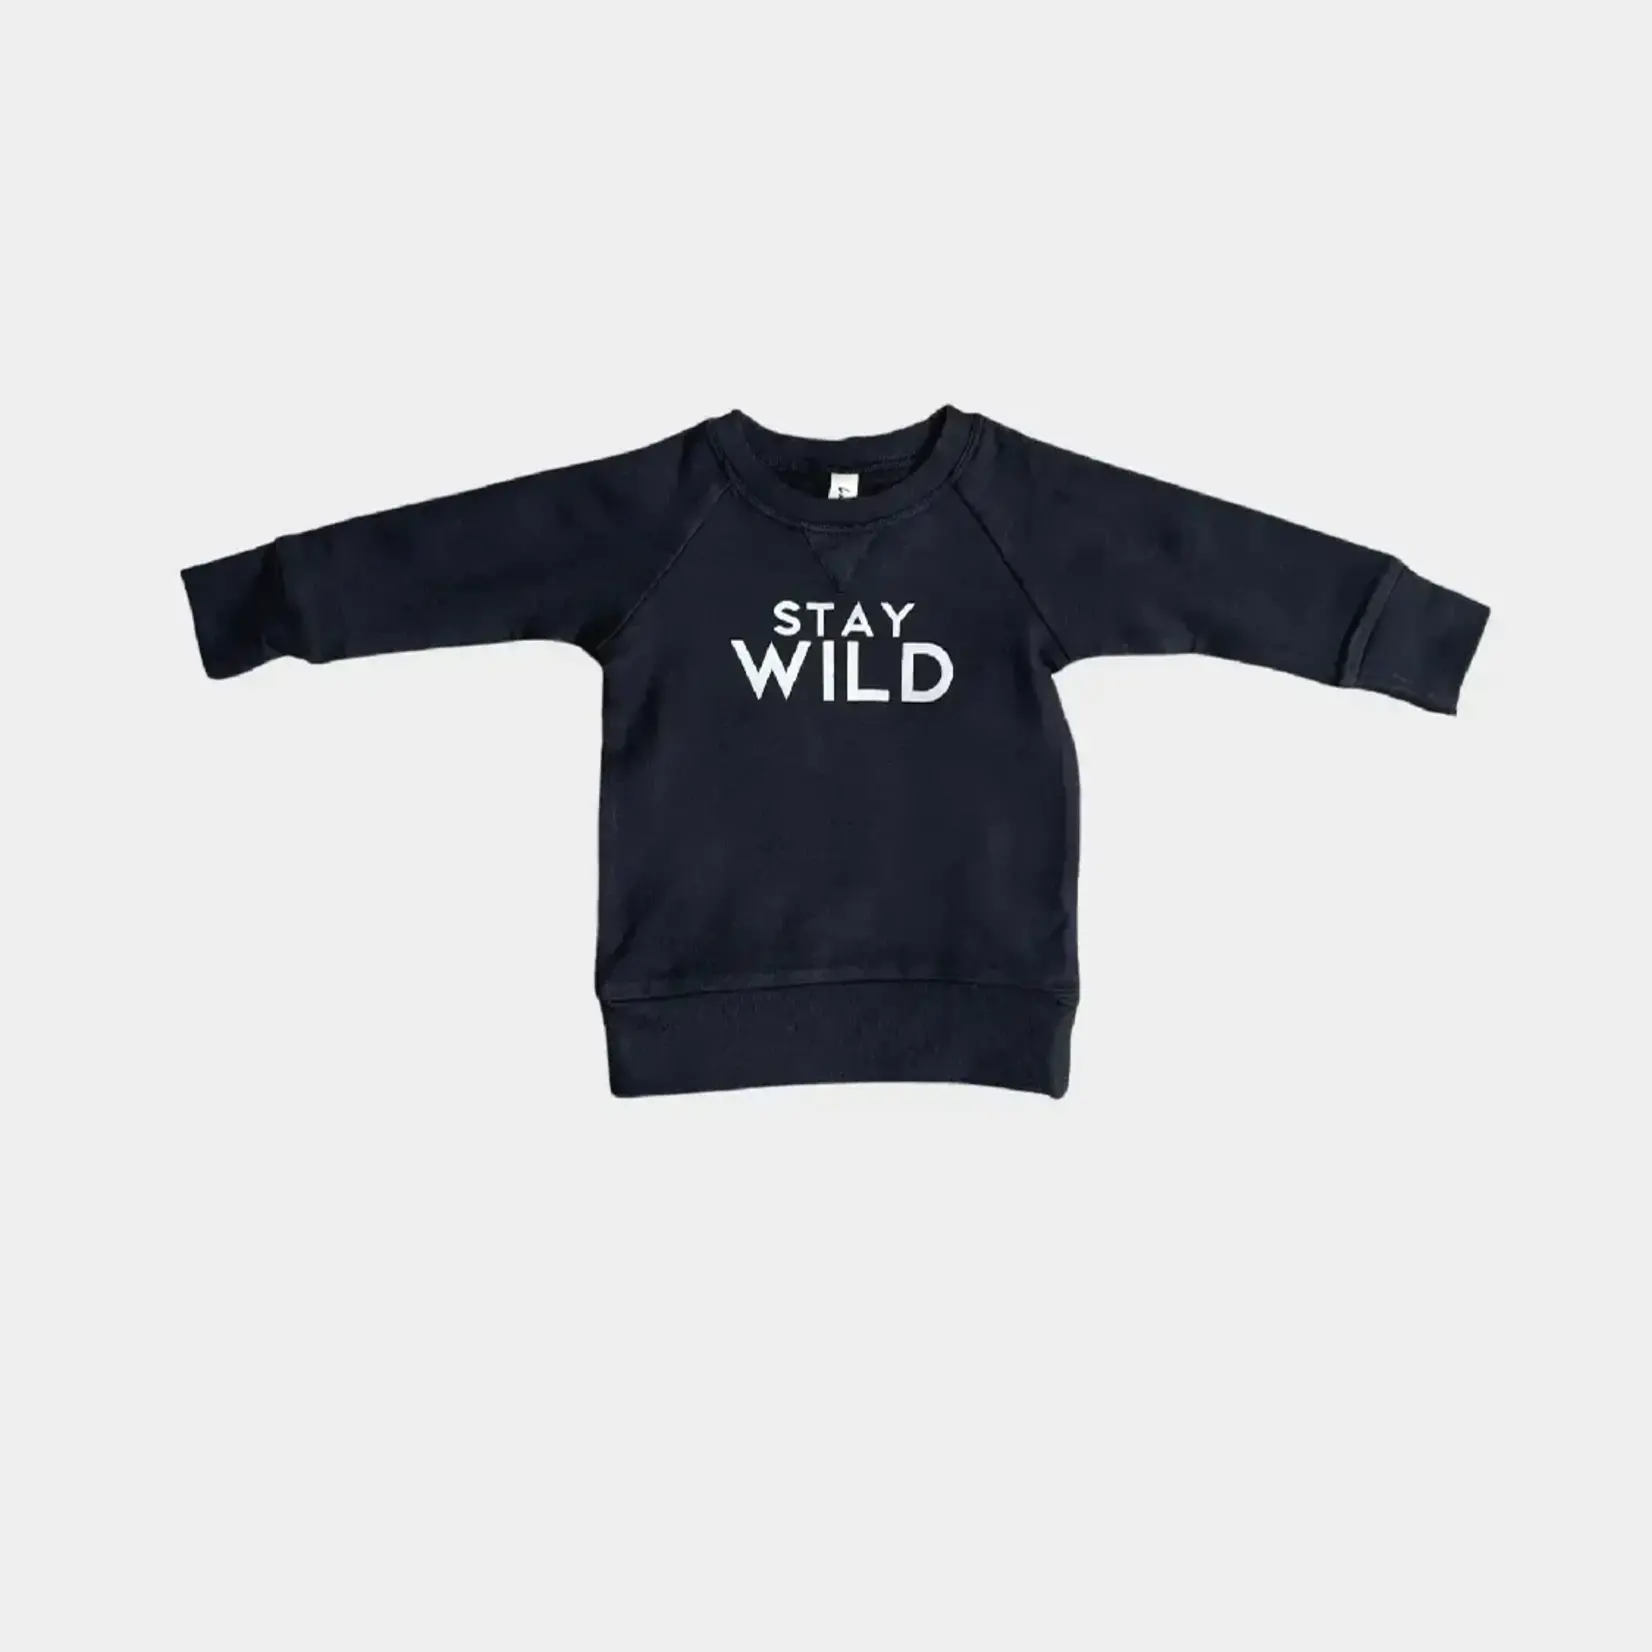 babysprouts clothing company Kid's Raglan Sweatshirt in Stay Wild